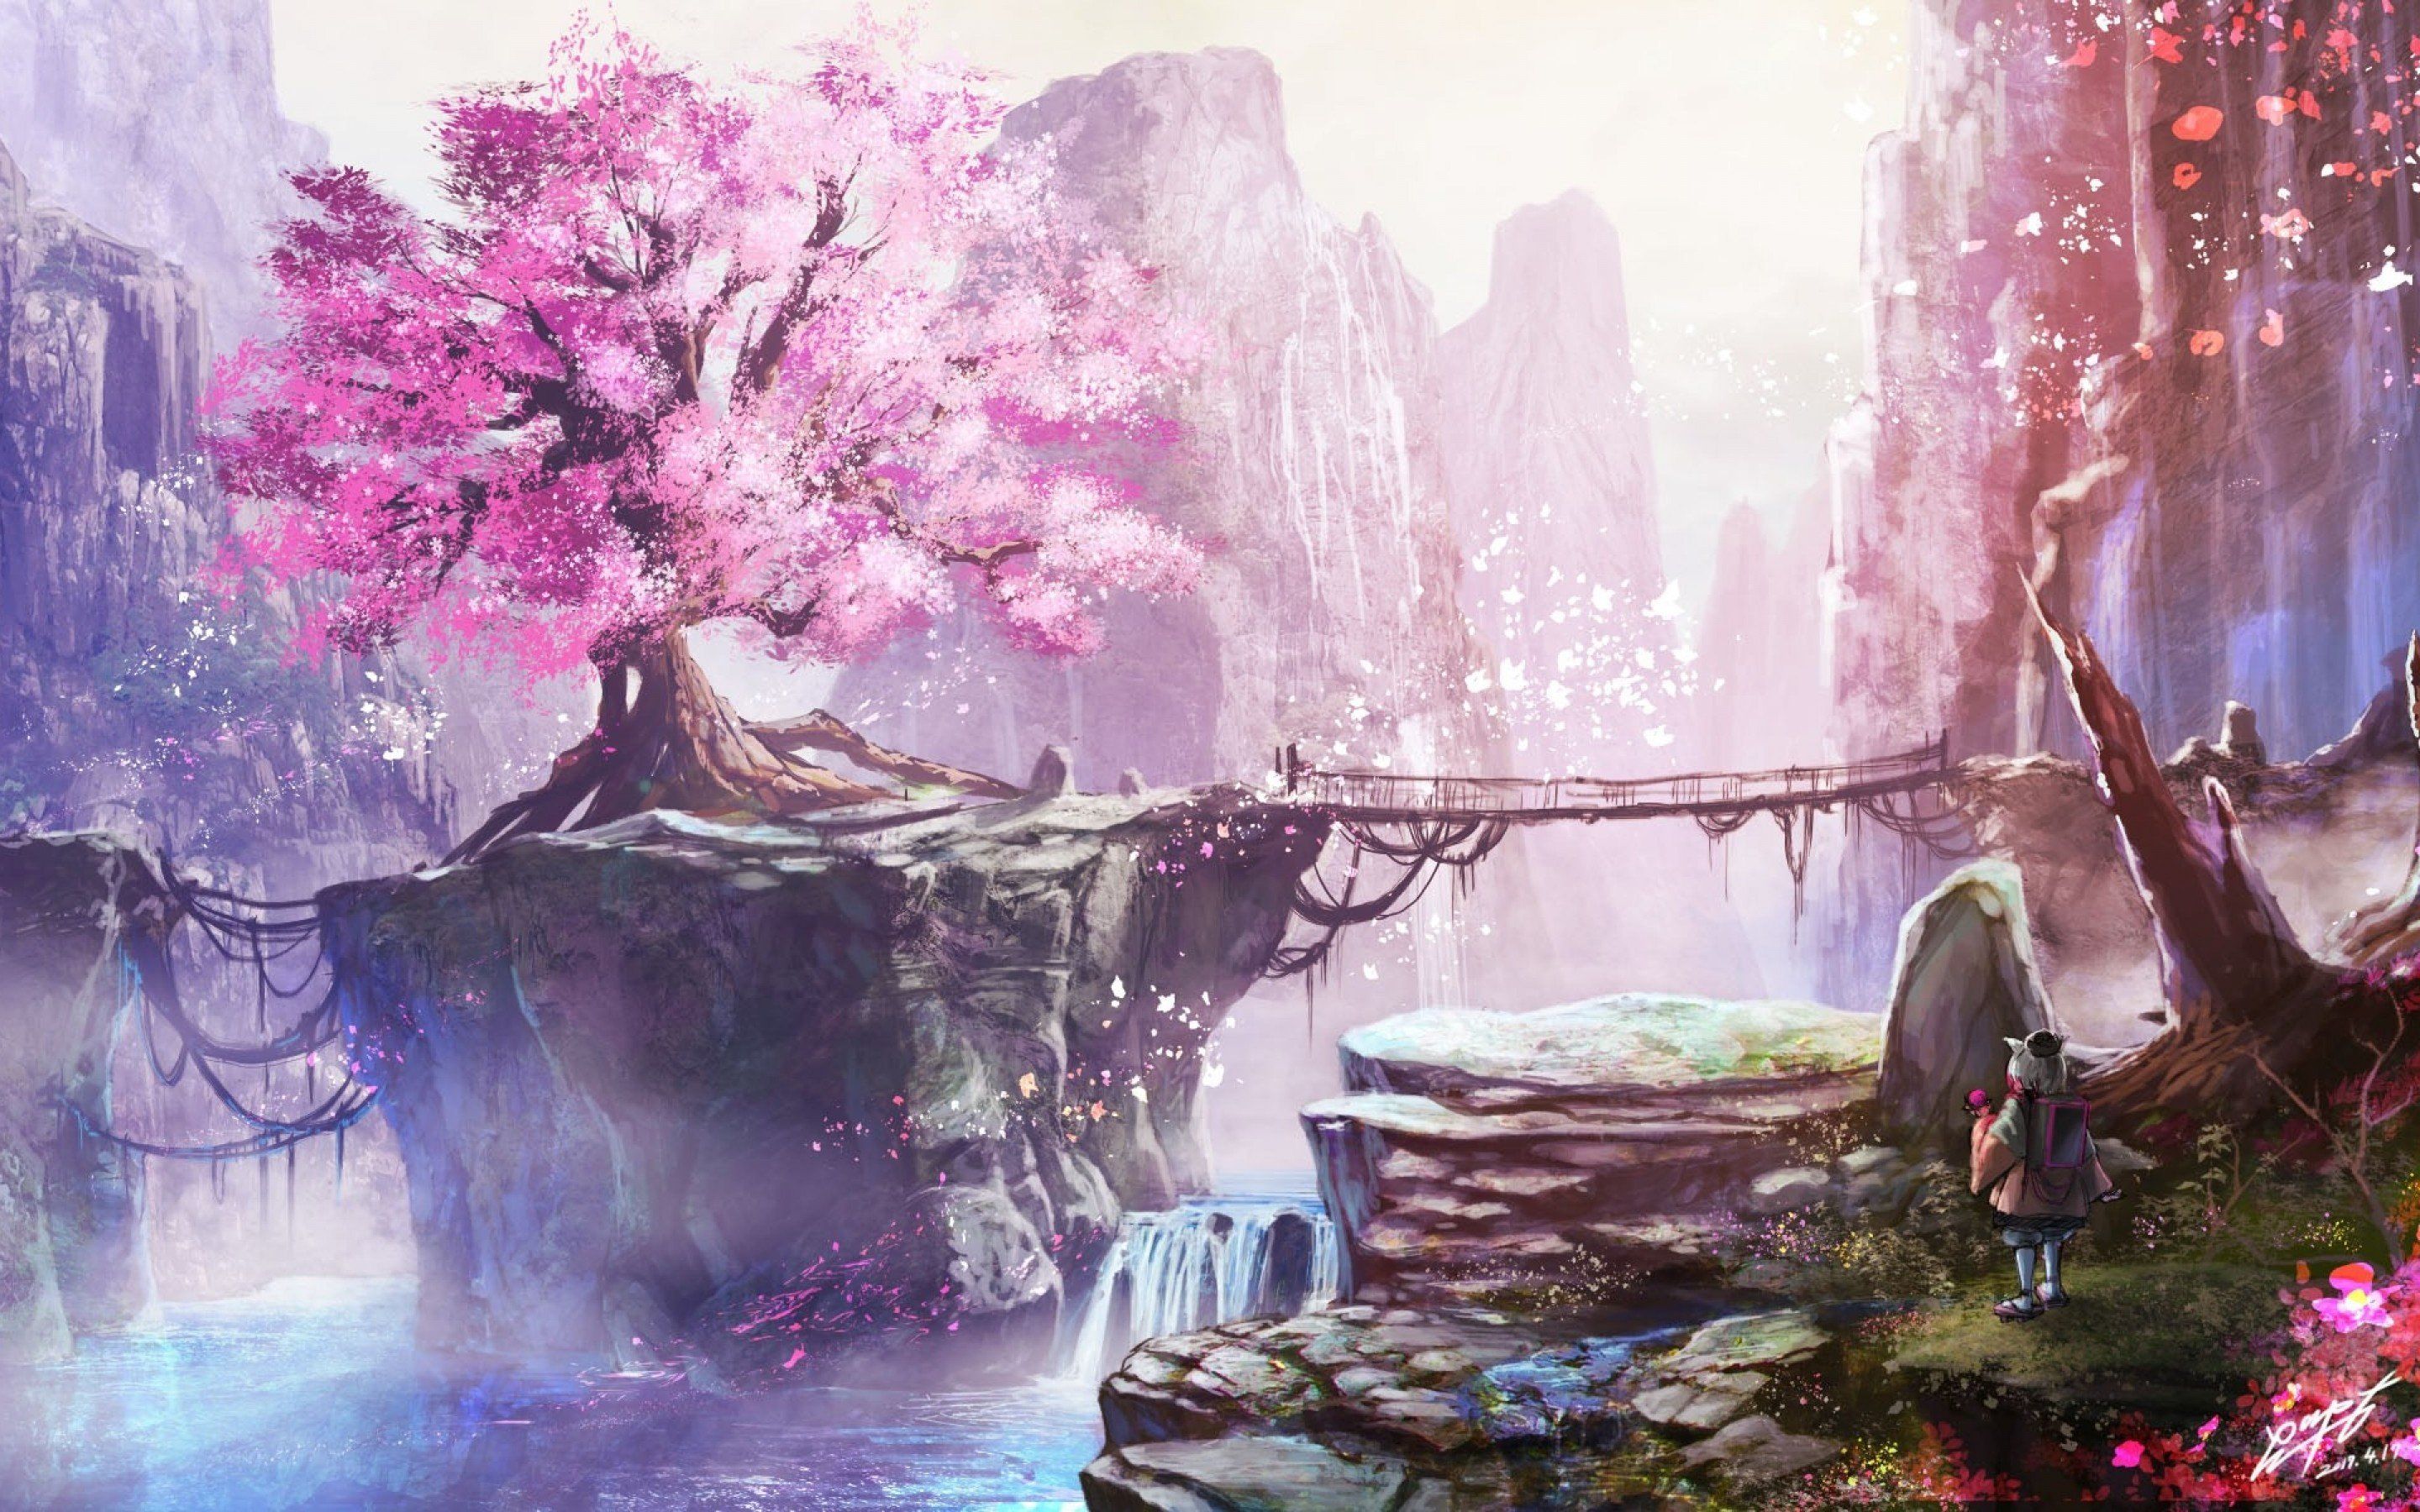 Anime Cherry Blossom Tree wallpaper in 2880x1800 resolution